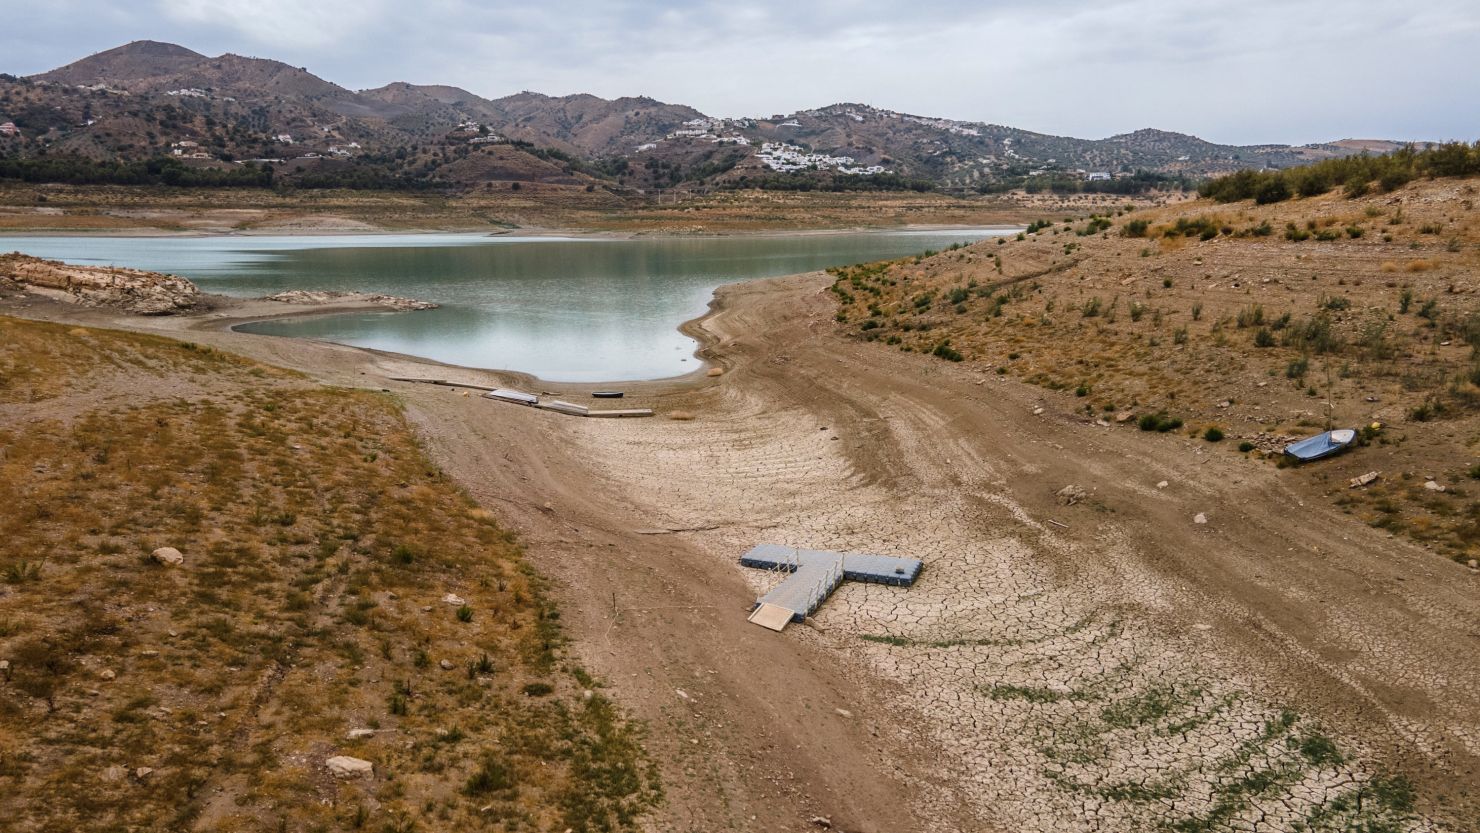 The Viñuela reservoir, located in La Axarquia, on September 01, 2022 in Málaga, Spain. 